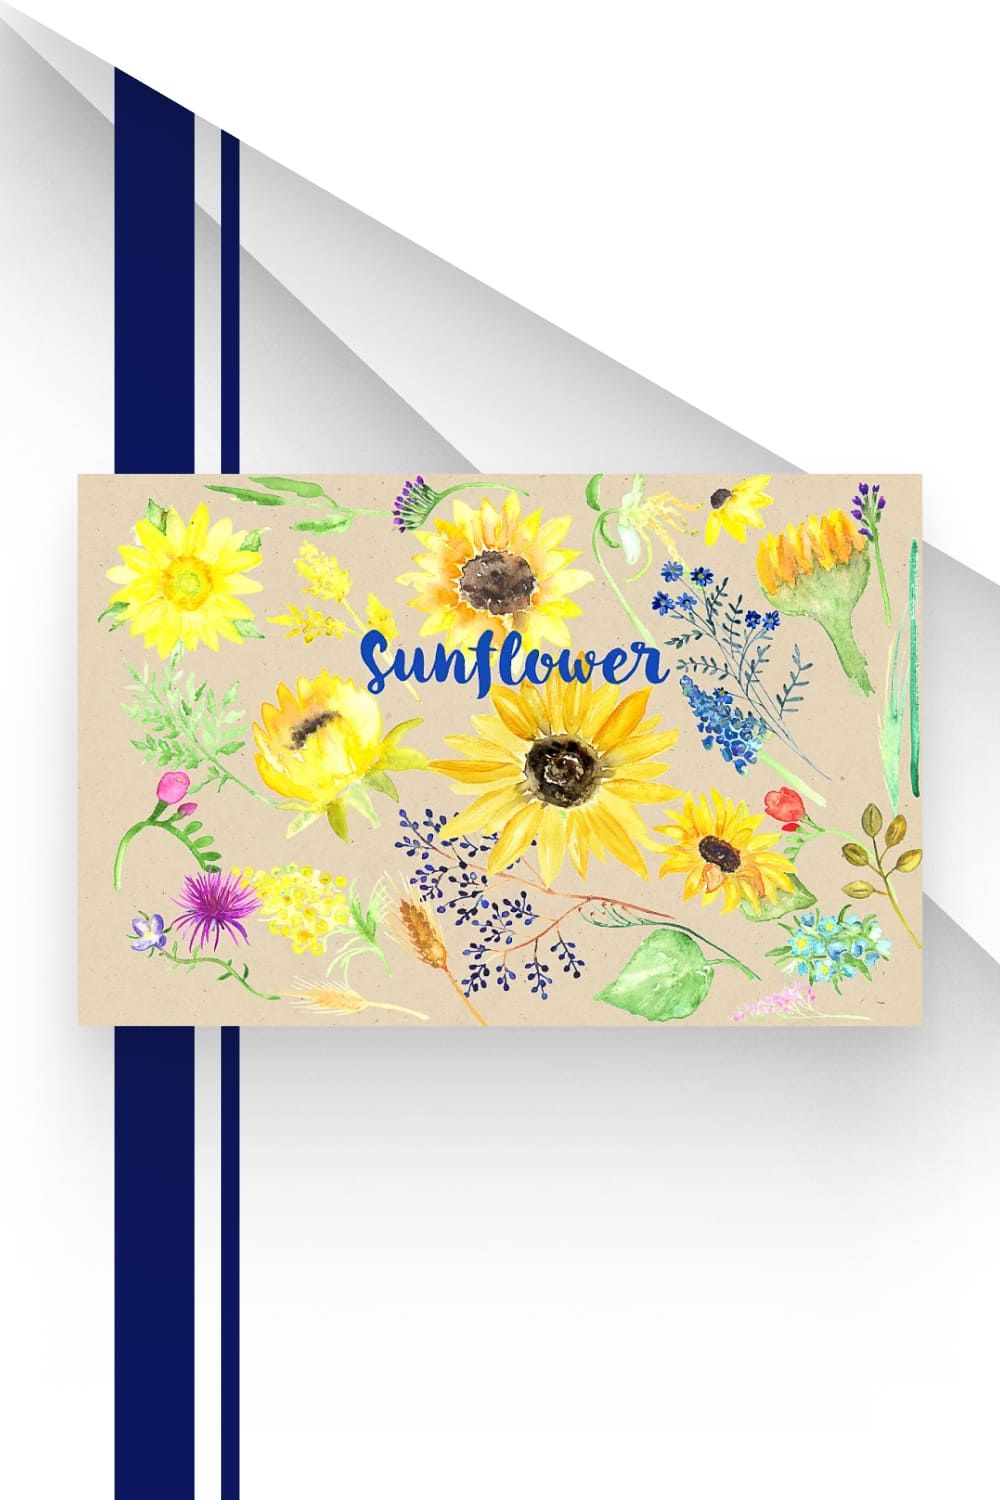 Sunflower Watercolor Clip Art.